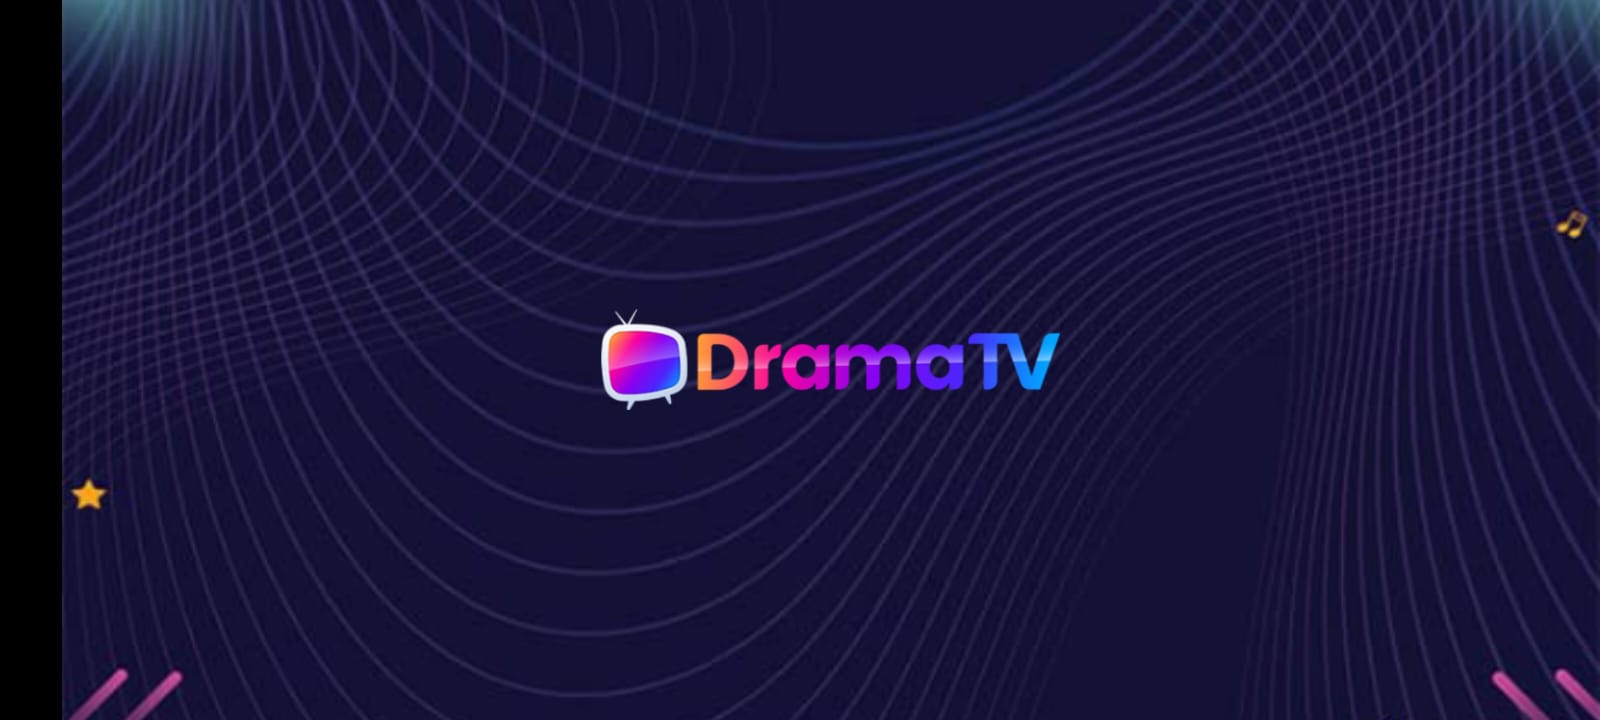 Drama TV Apk